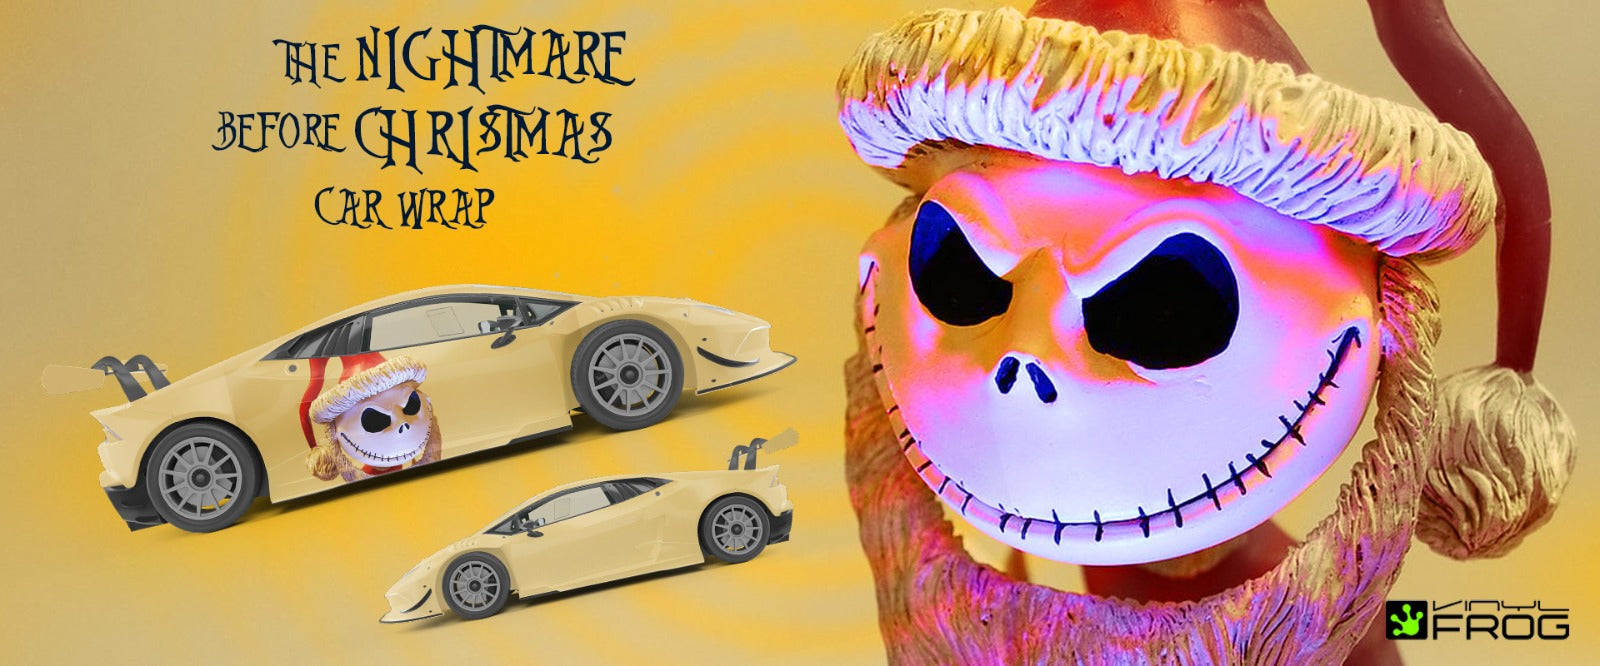 Nightmare Before Christmas Car Wrap